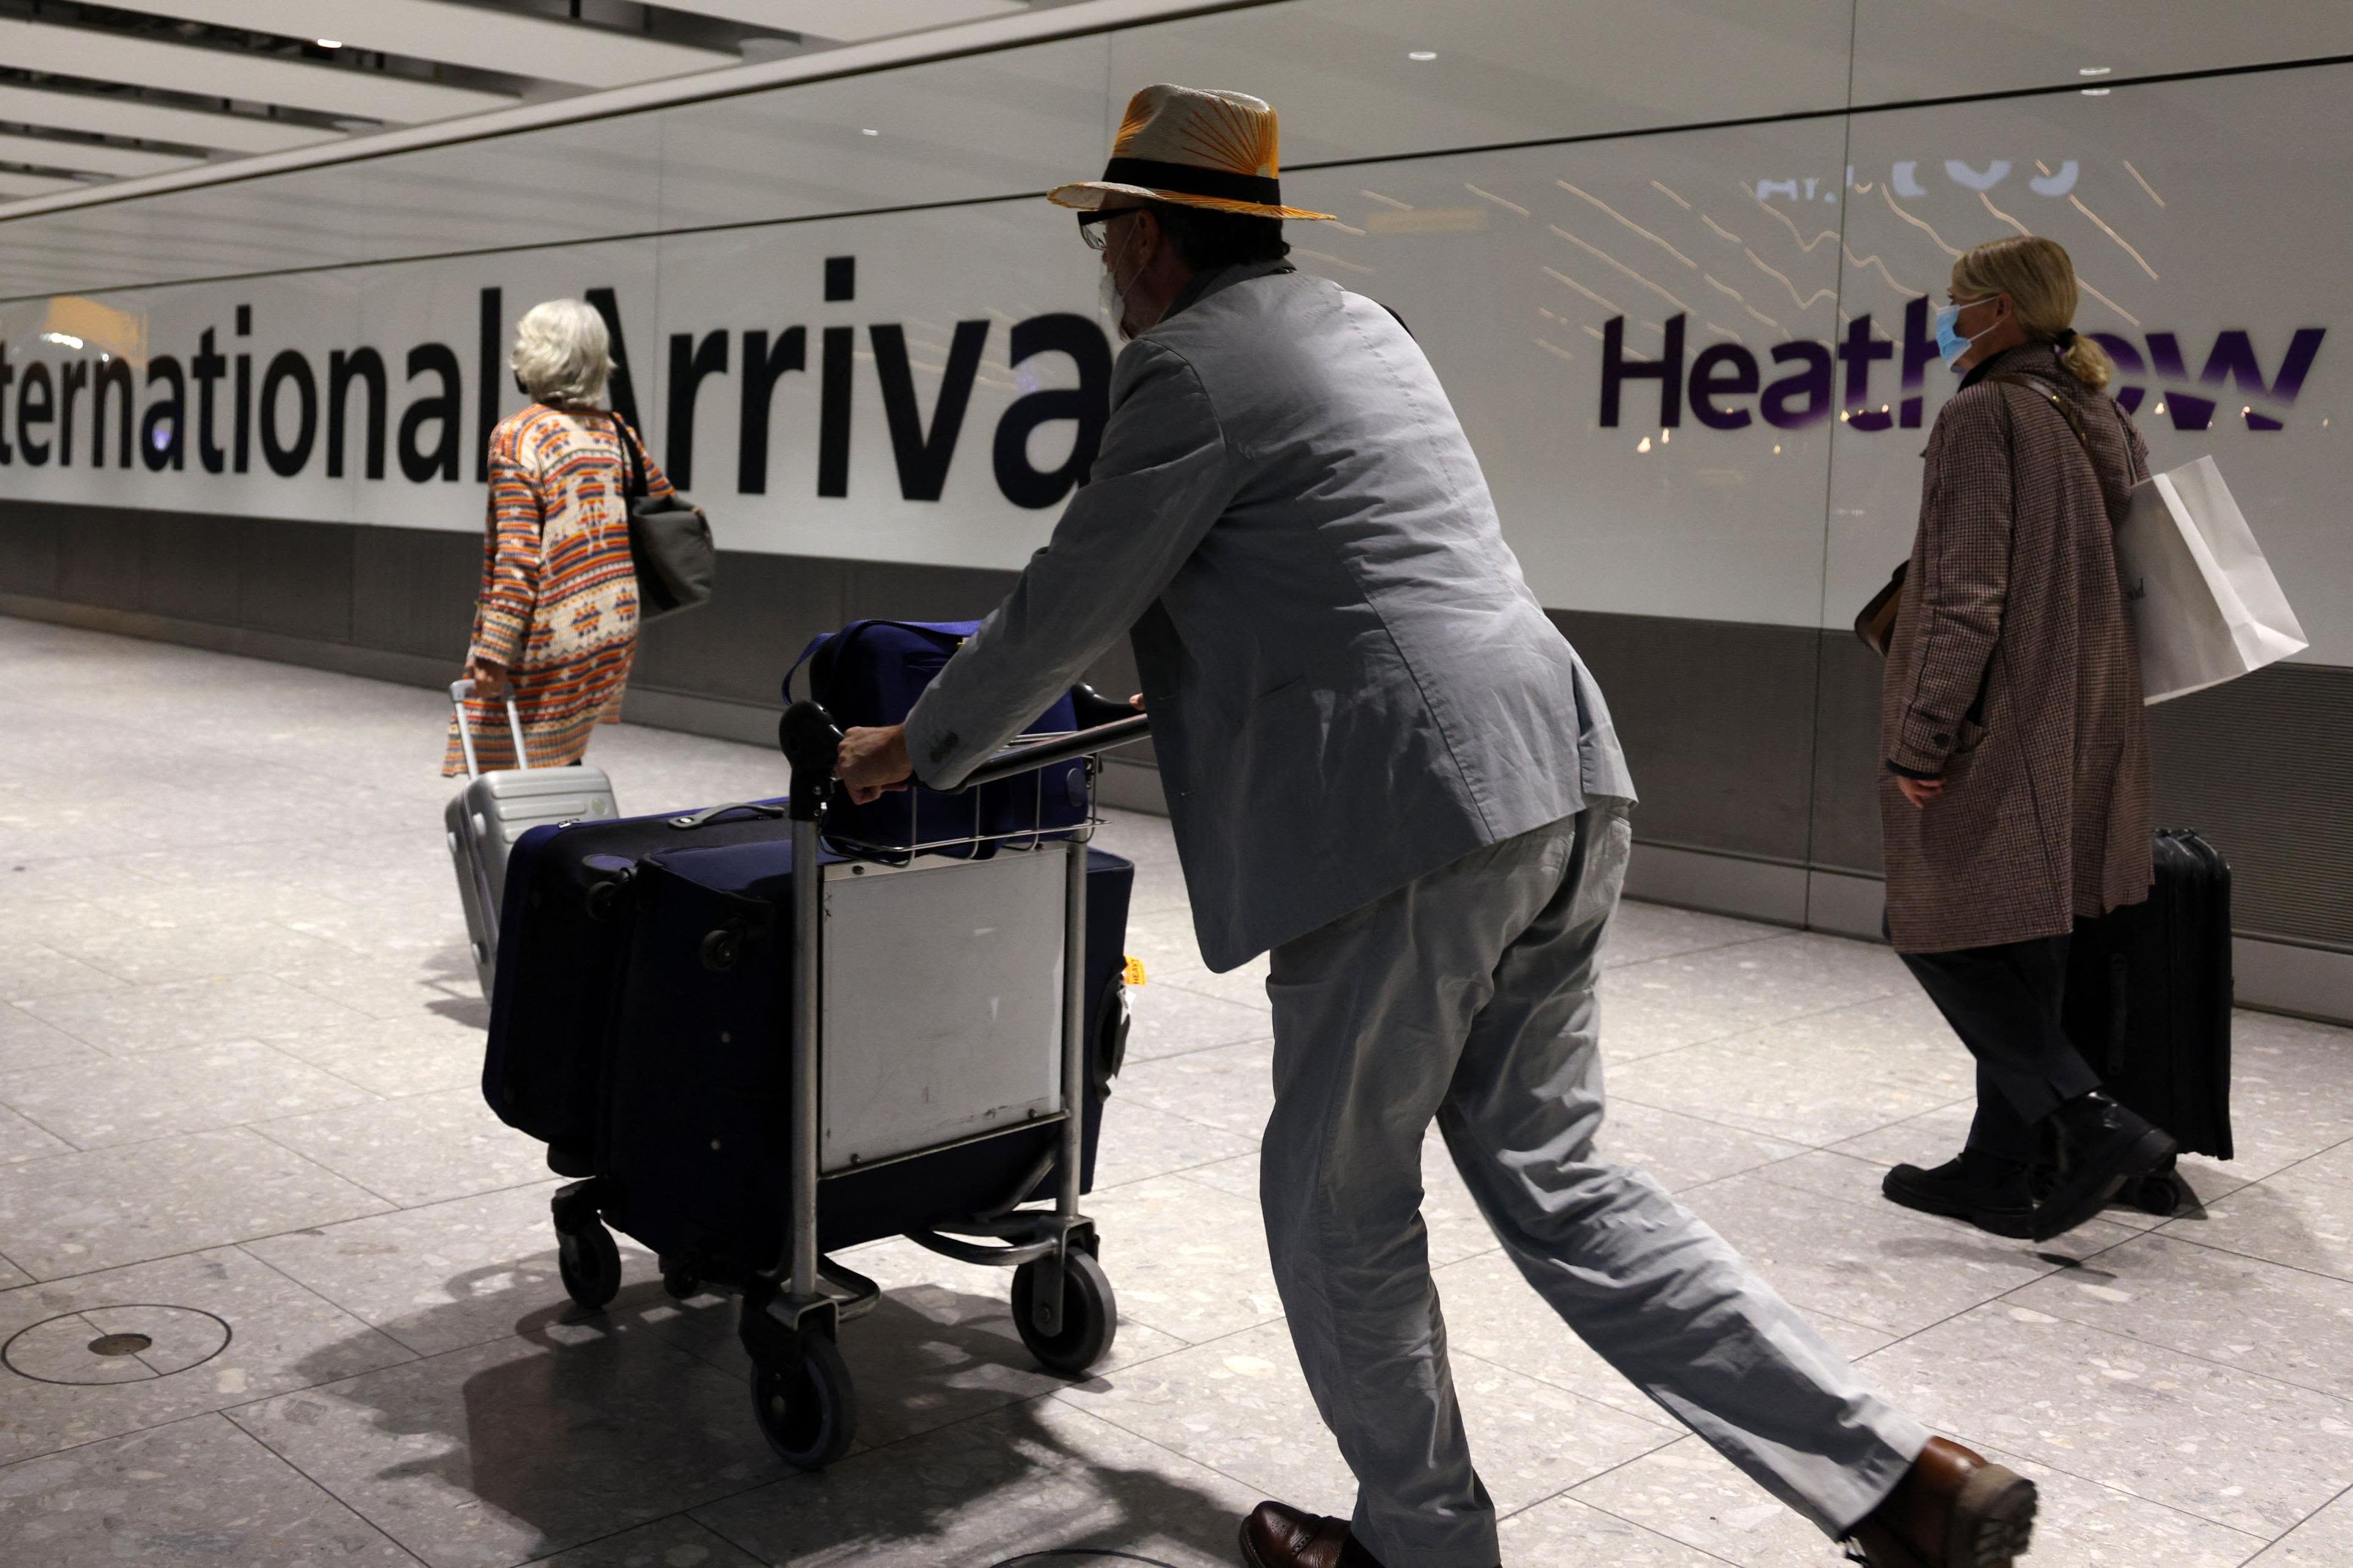 Share your experience of Heathrow airport's new 'red list' terminal, Coronavirus